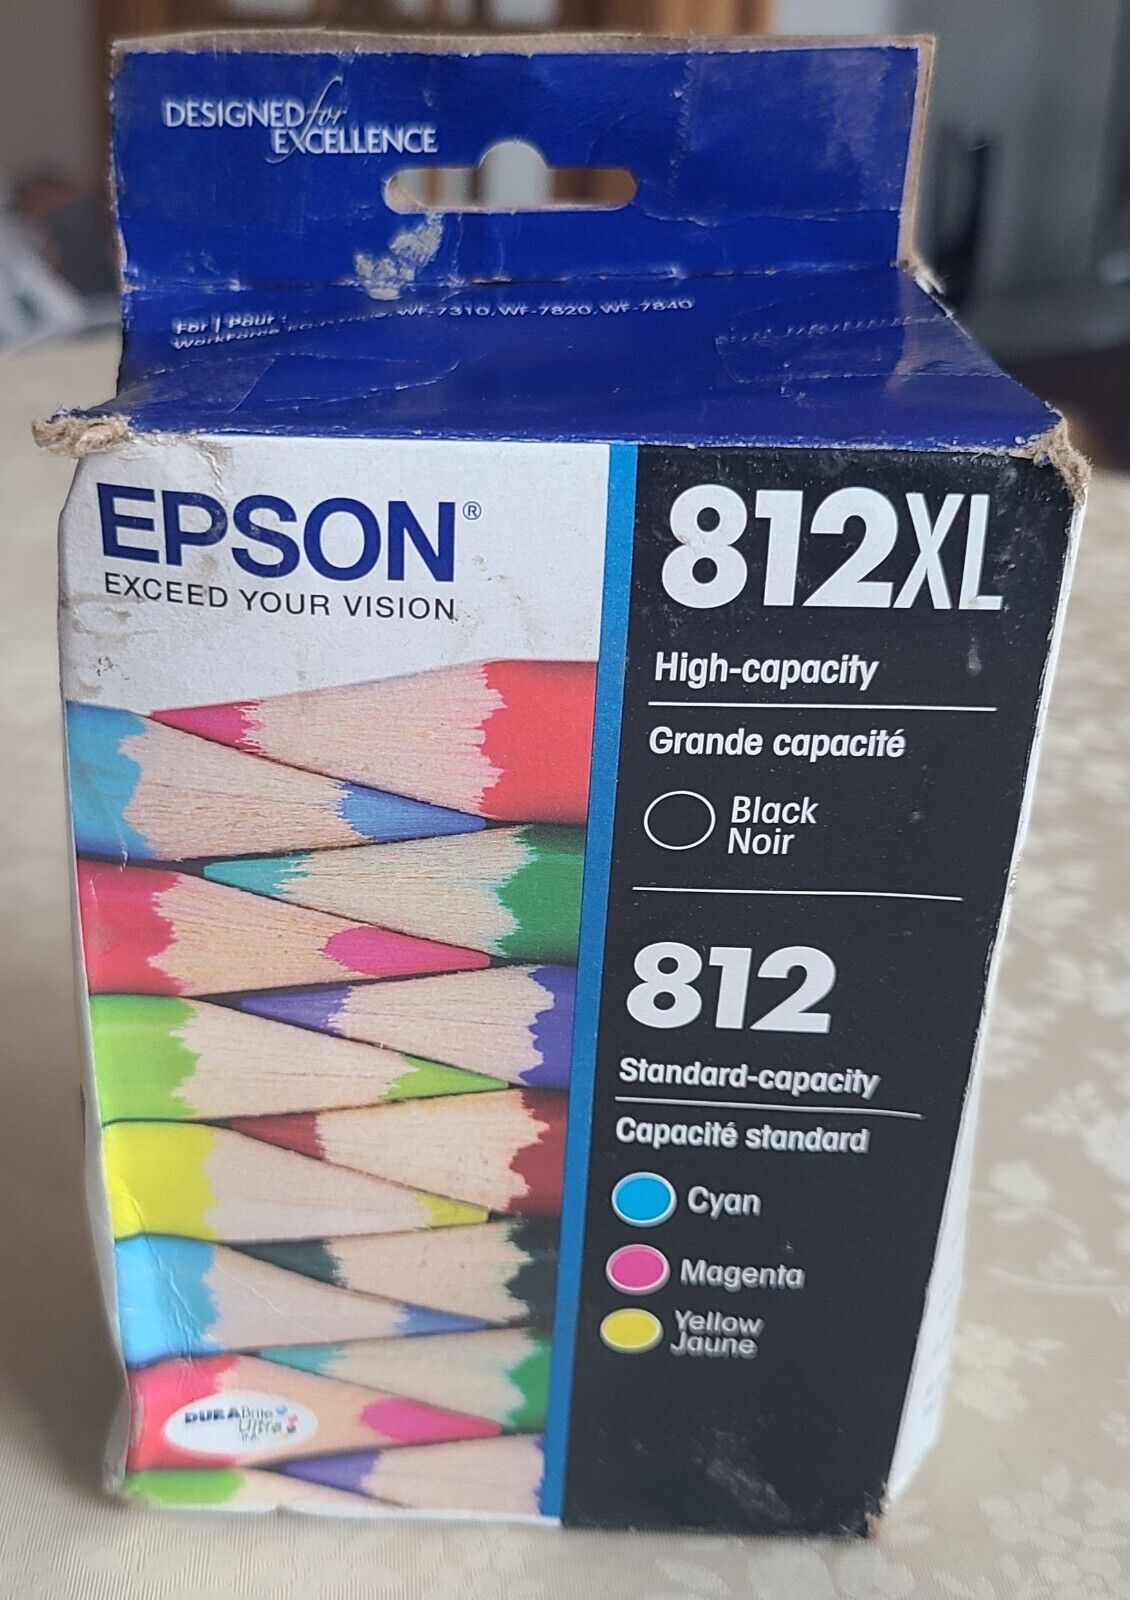 Epson 812XL High-Capacity Black + 812 Color Cyan/Magenta/Yellow Expires 09/2026